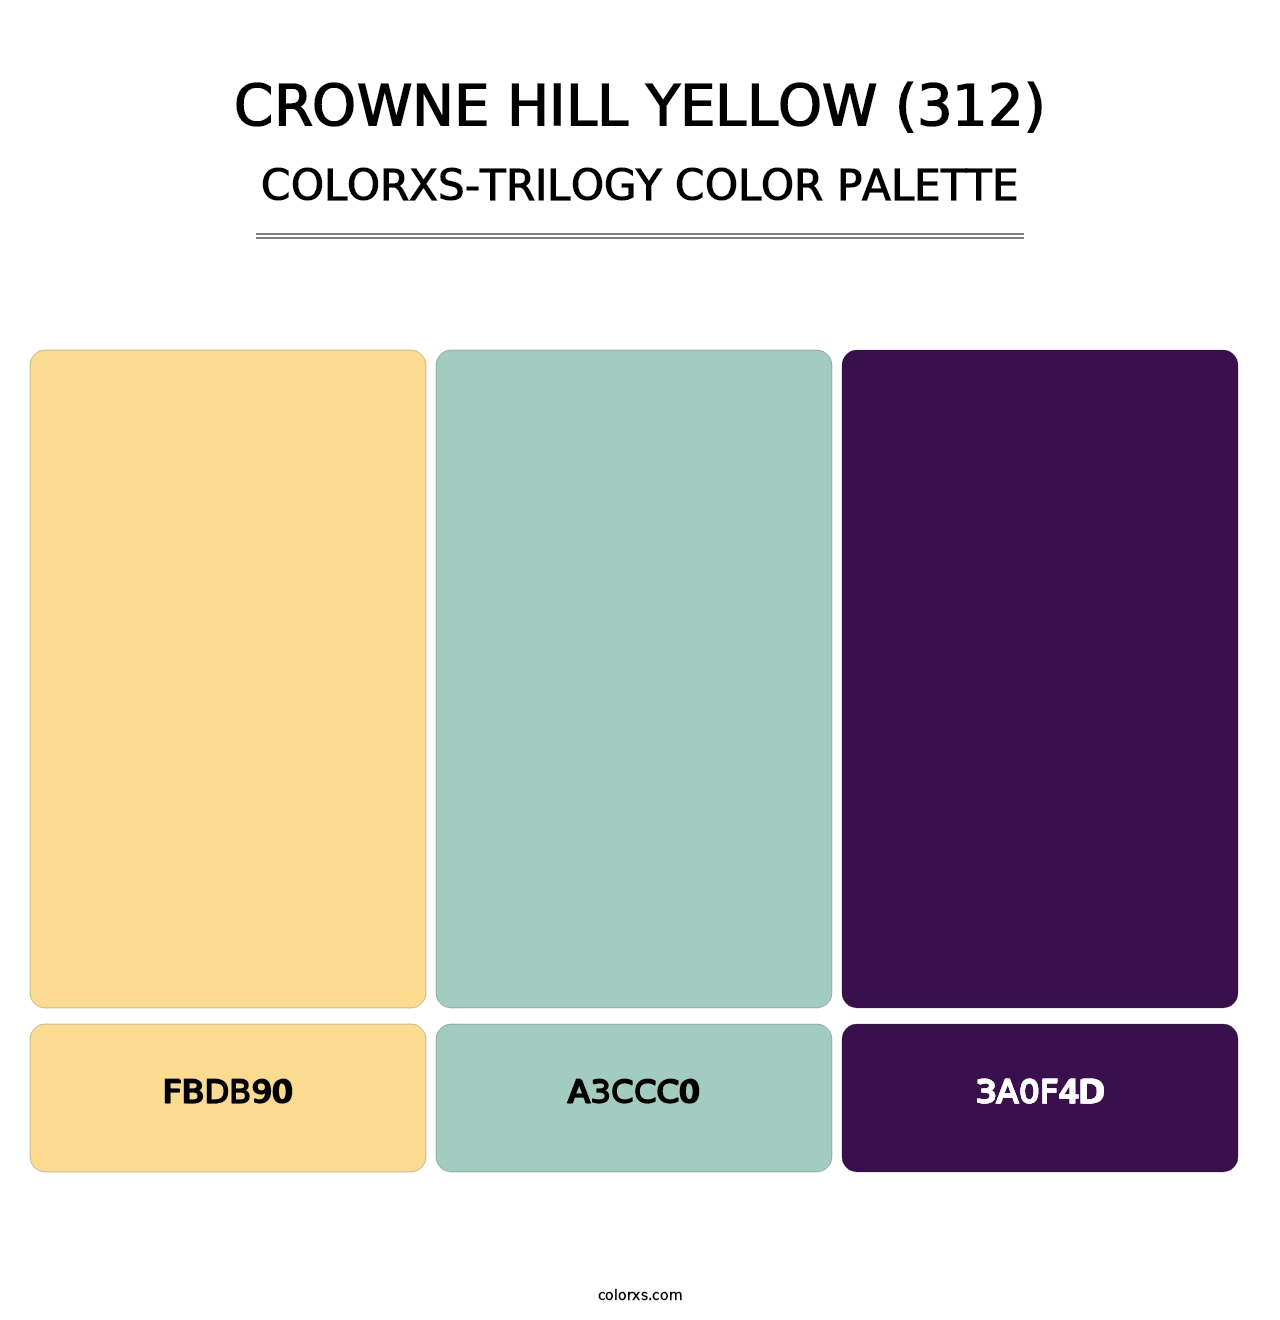 Crowne Hill Yellow (312) - Colorxs Trilogy Palette